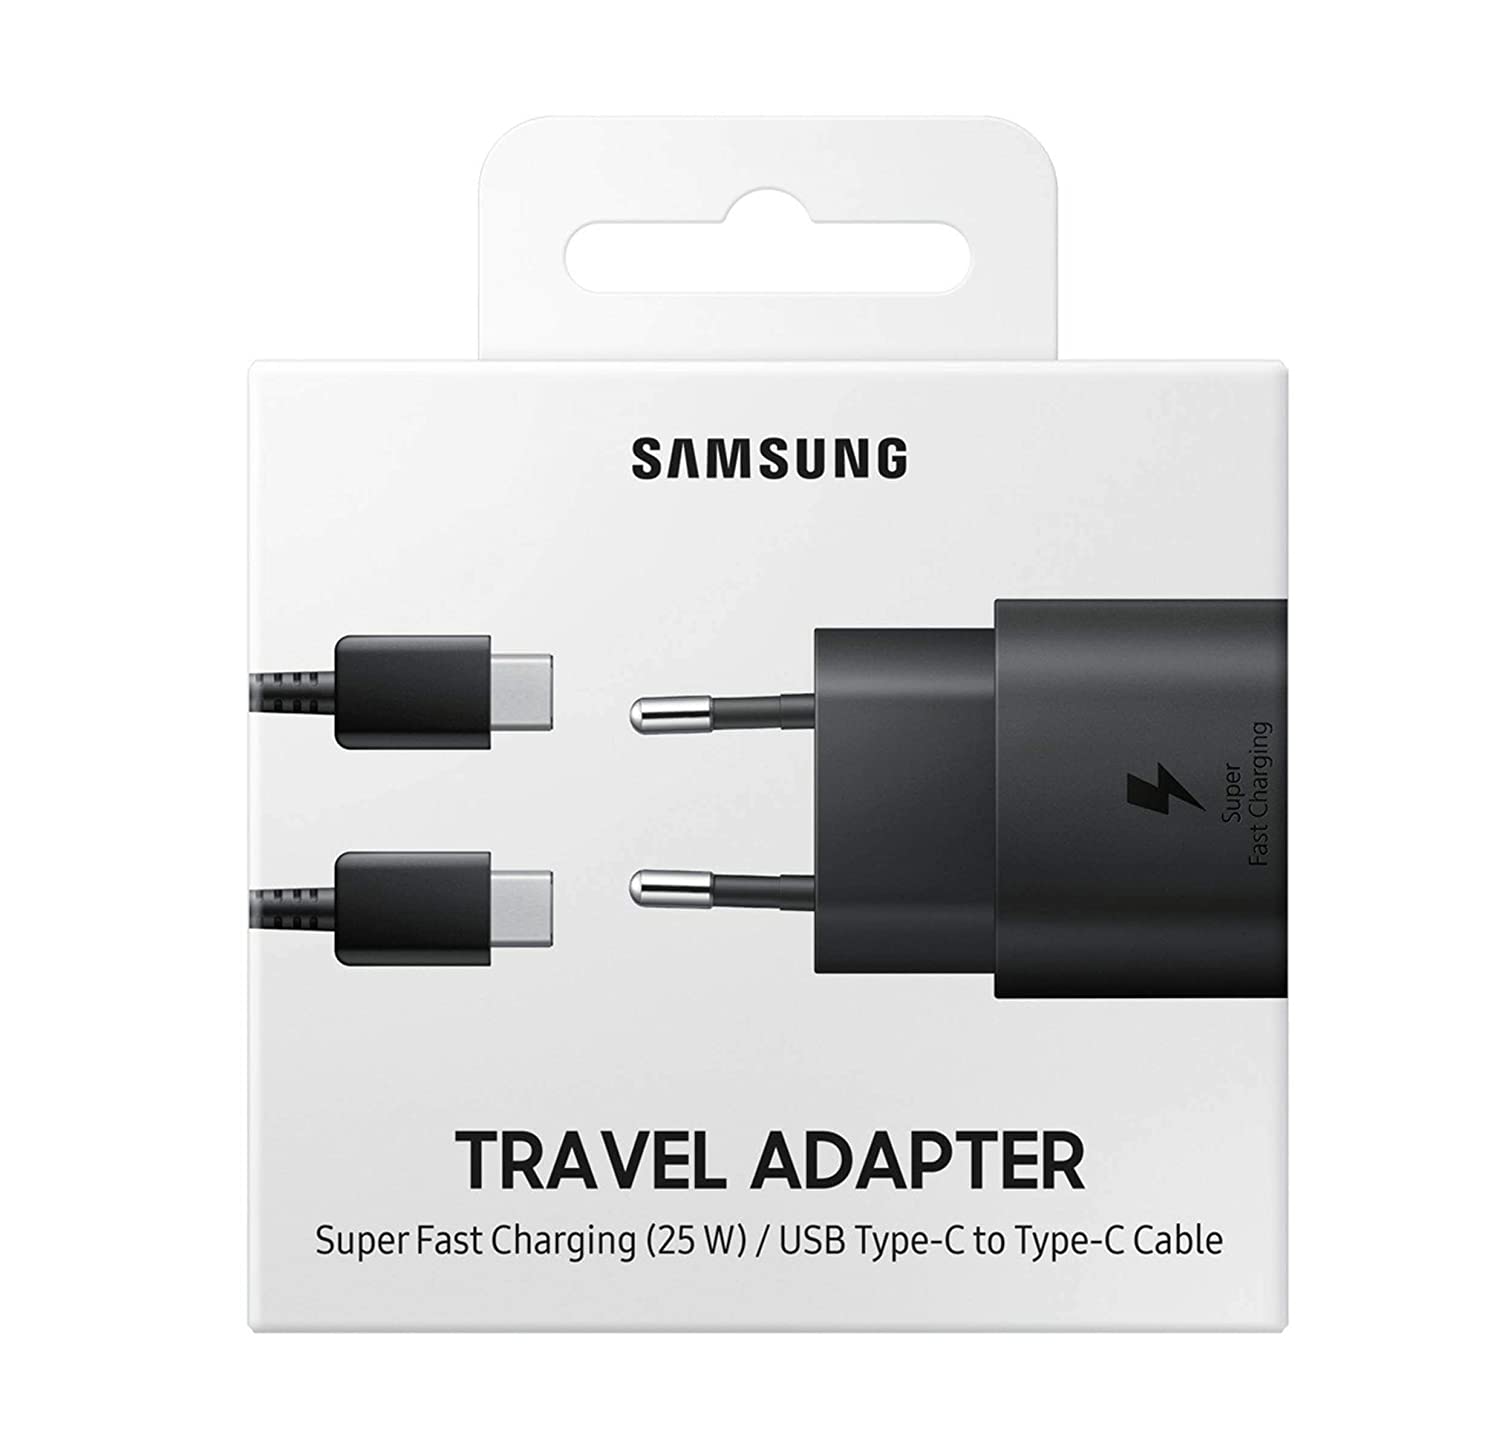 Samsung travel adapter photo